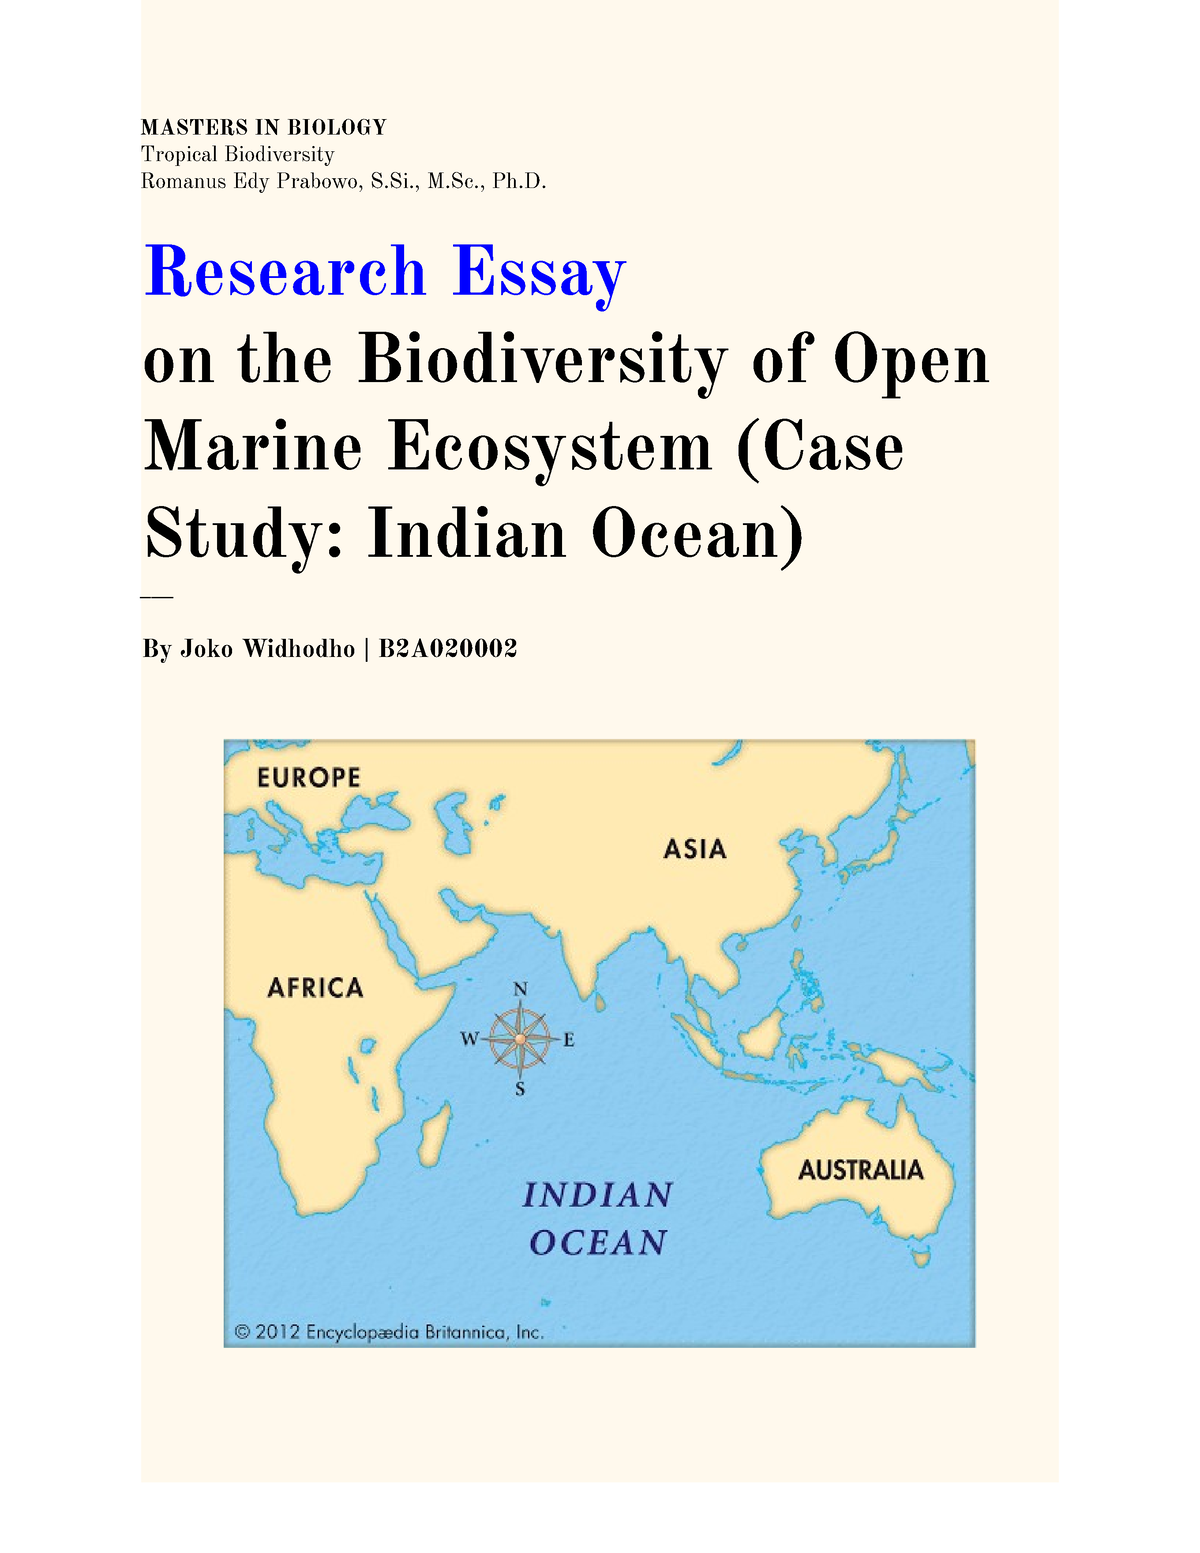 write an essay on marine ecosystem